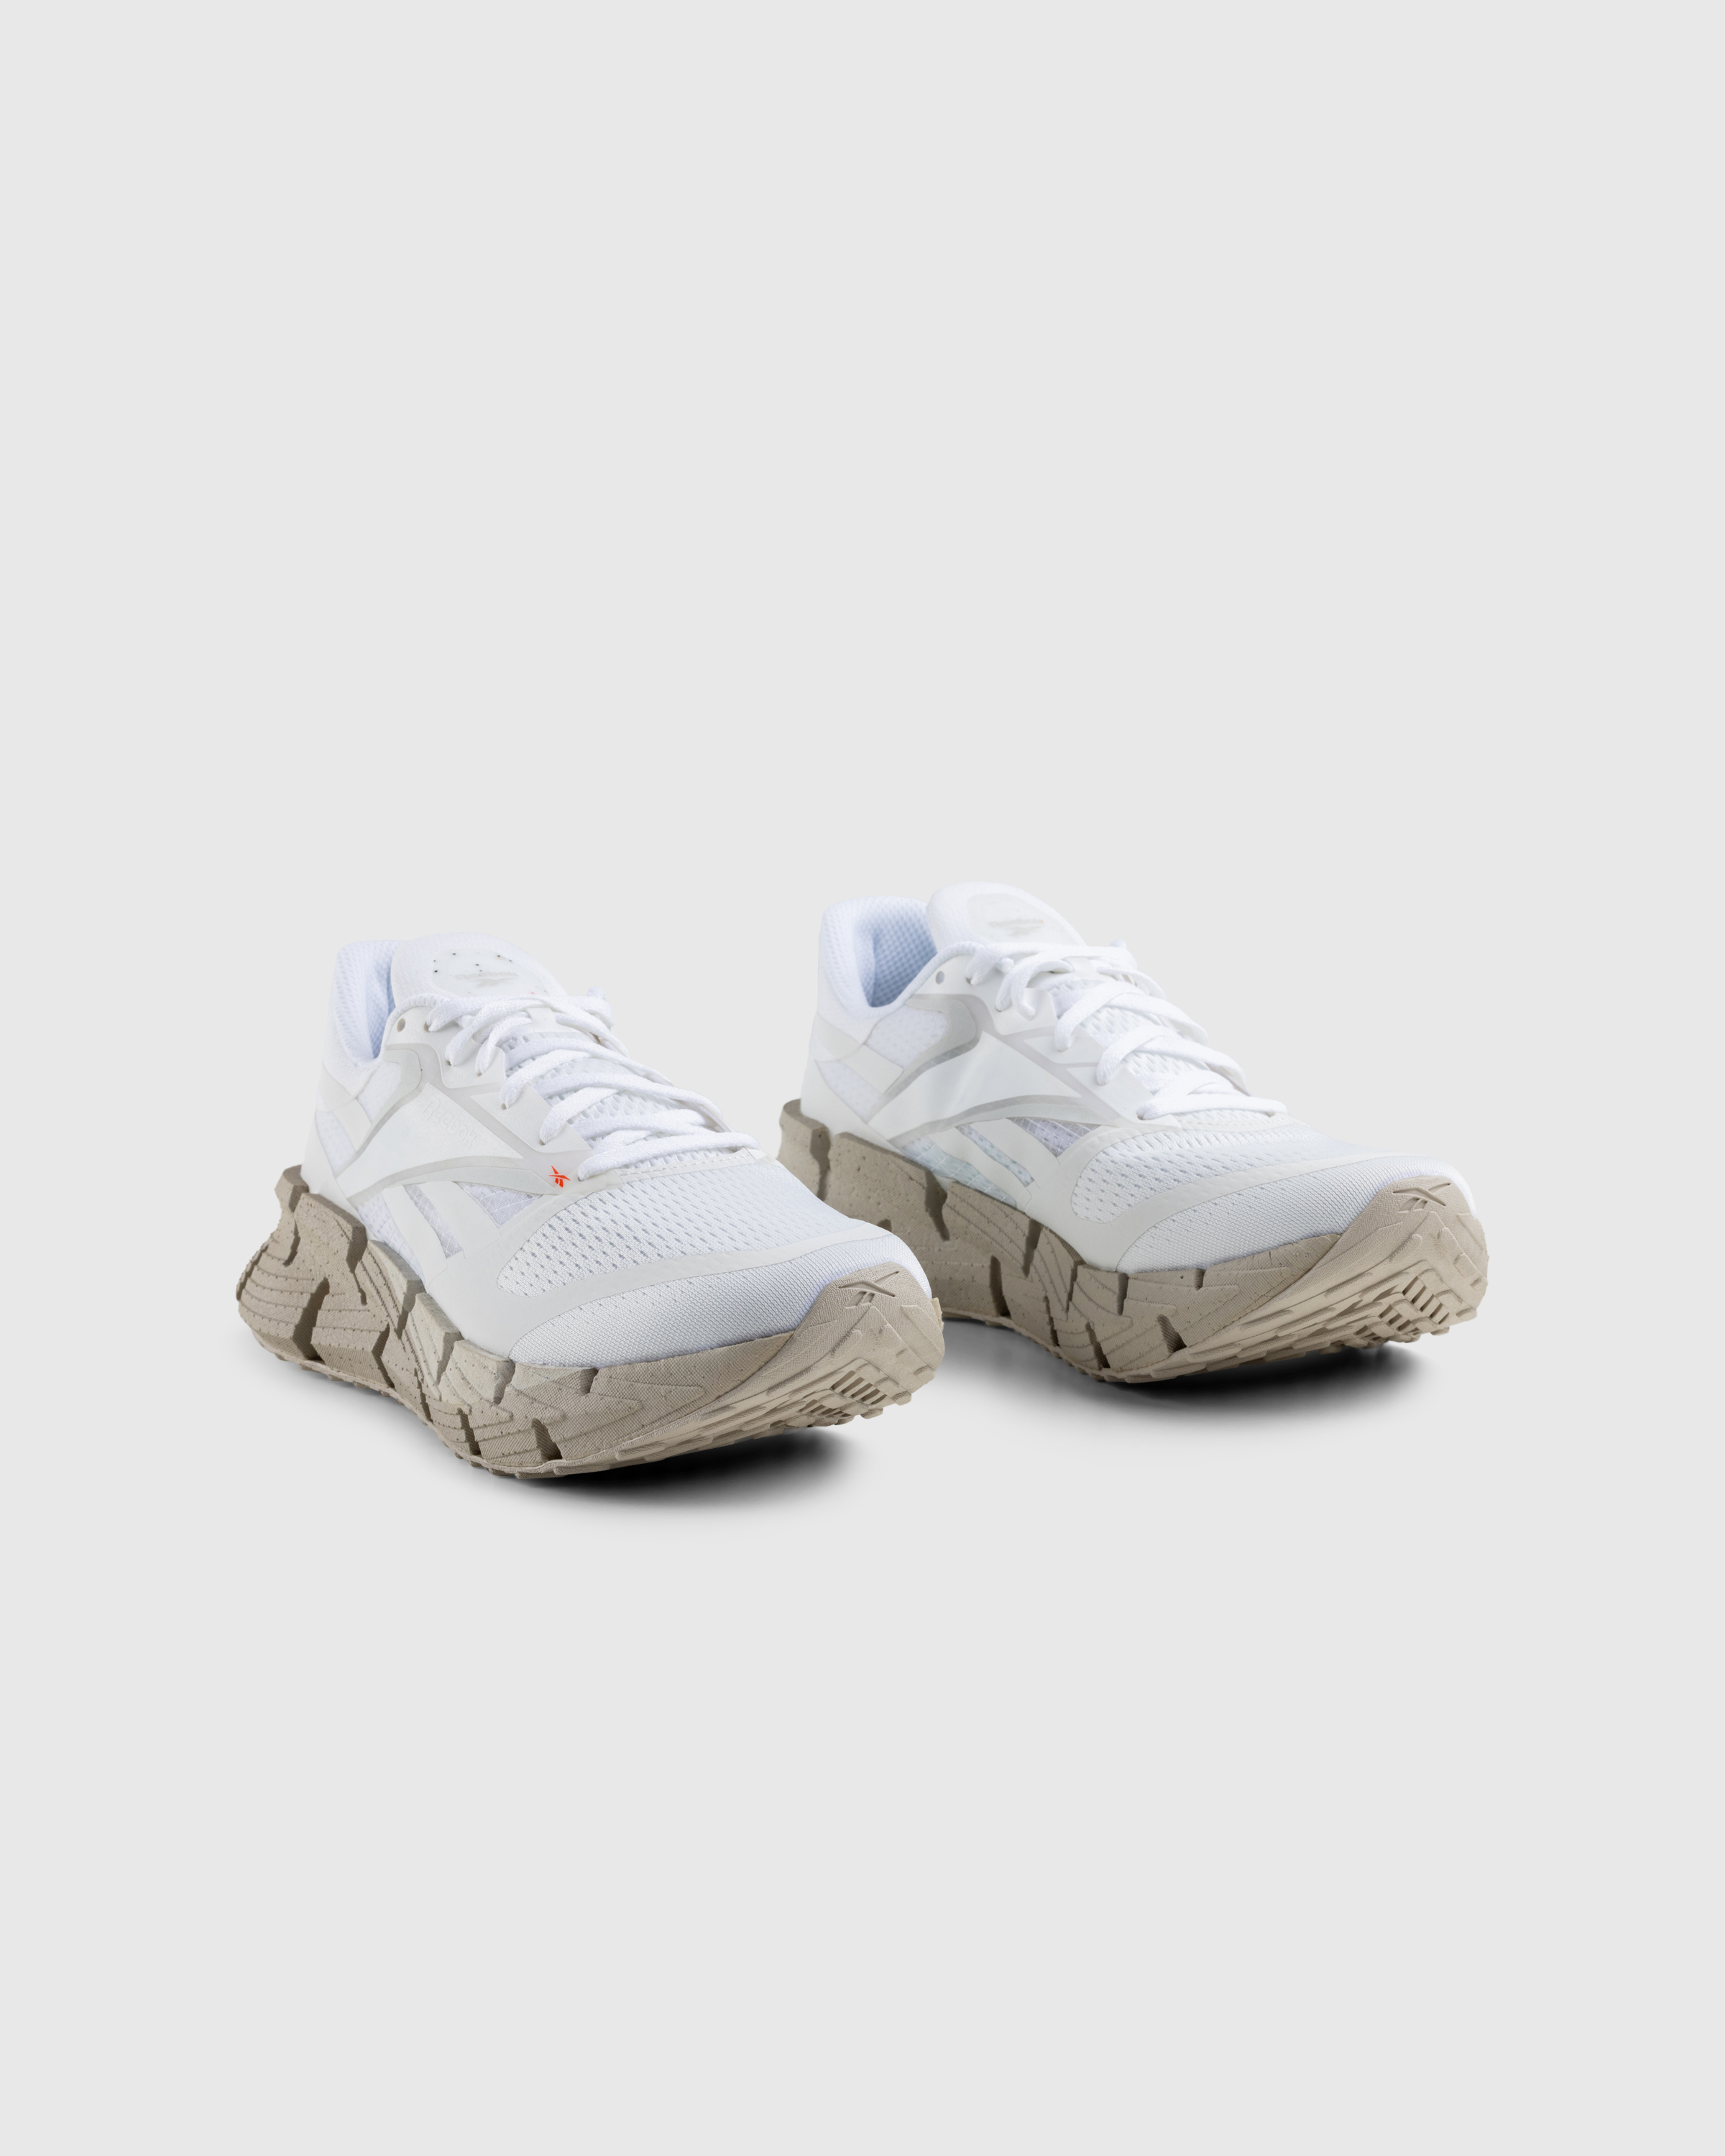 Reebok – FloatZig White - Low Top Sneakers - White - Image 3